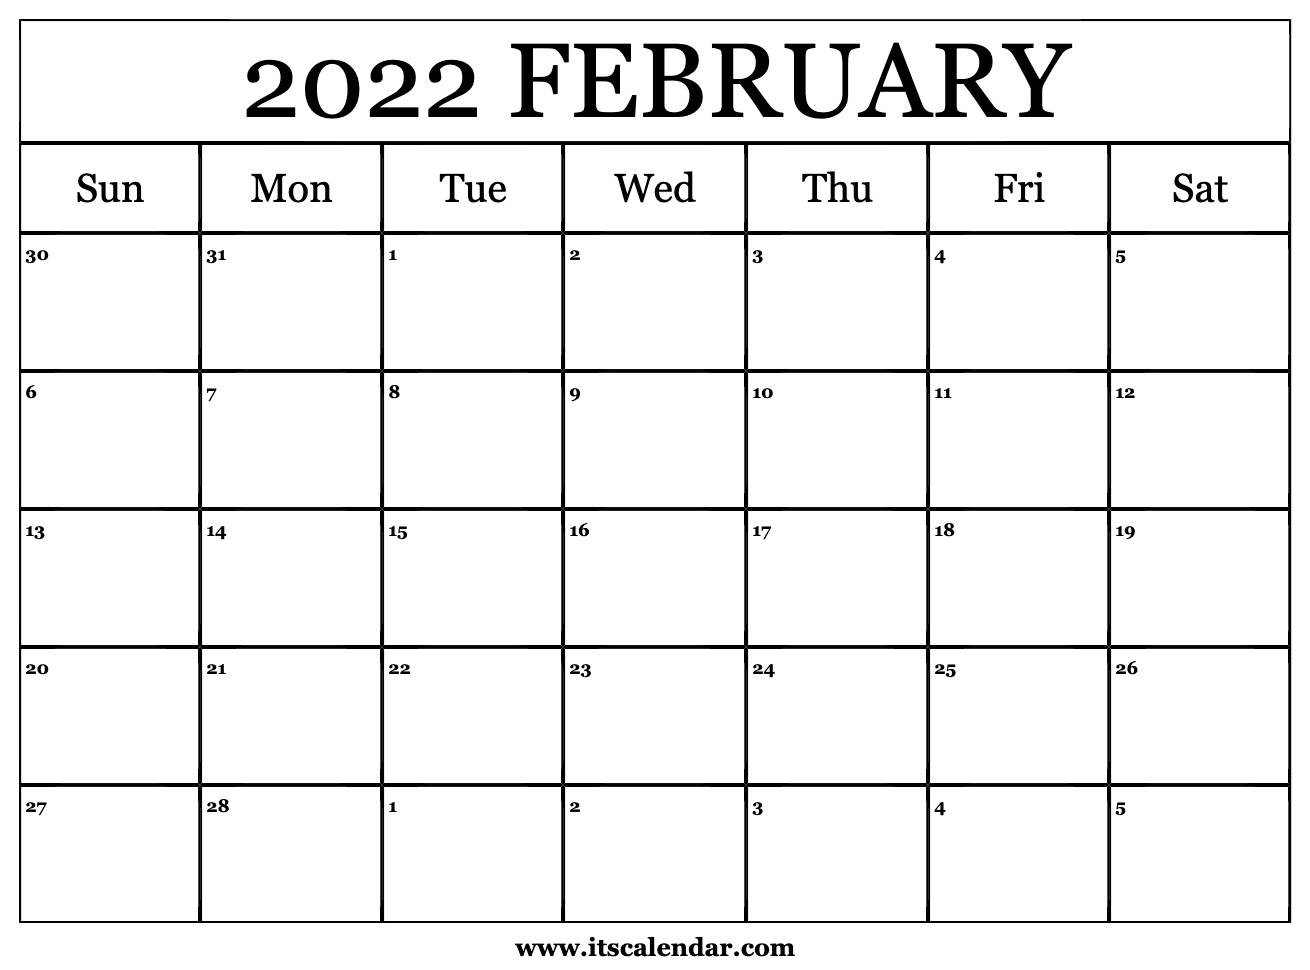 Pick February 2022 Hijri Calendar